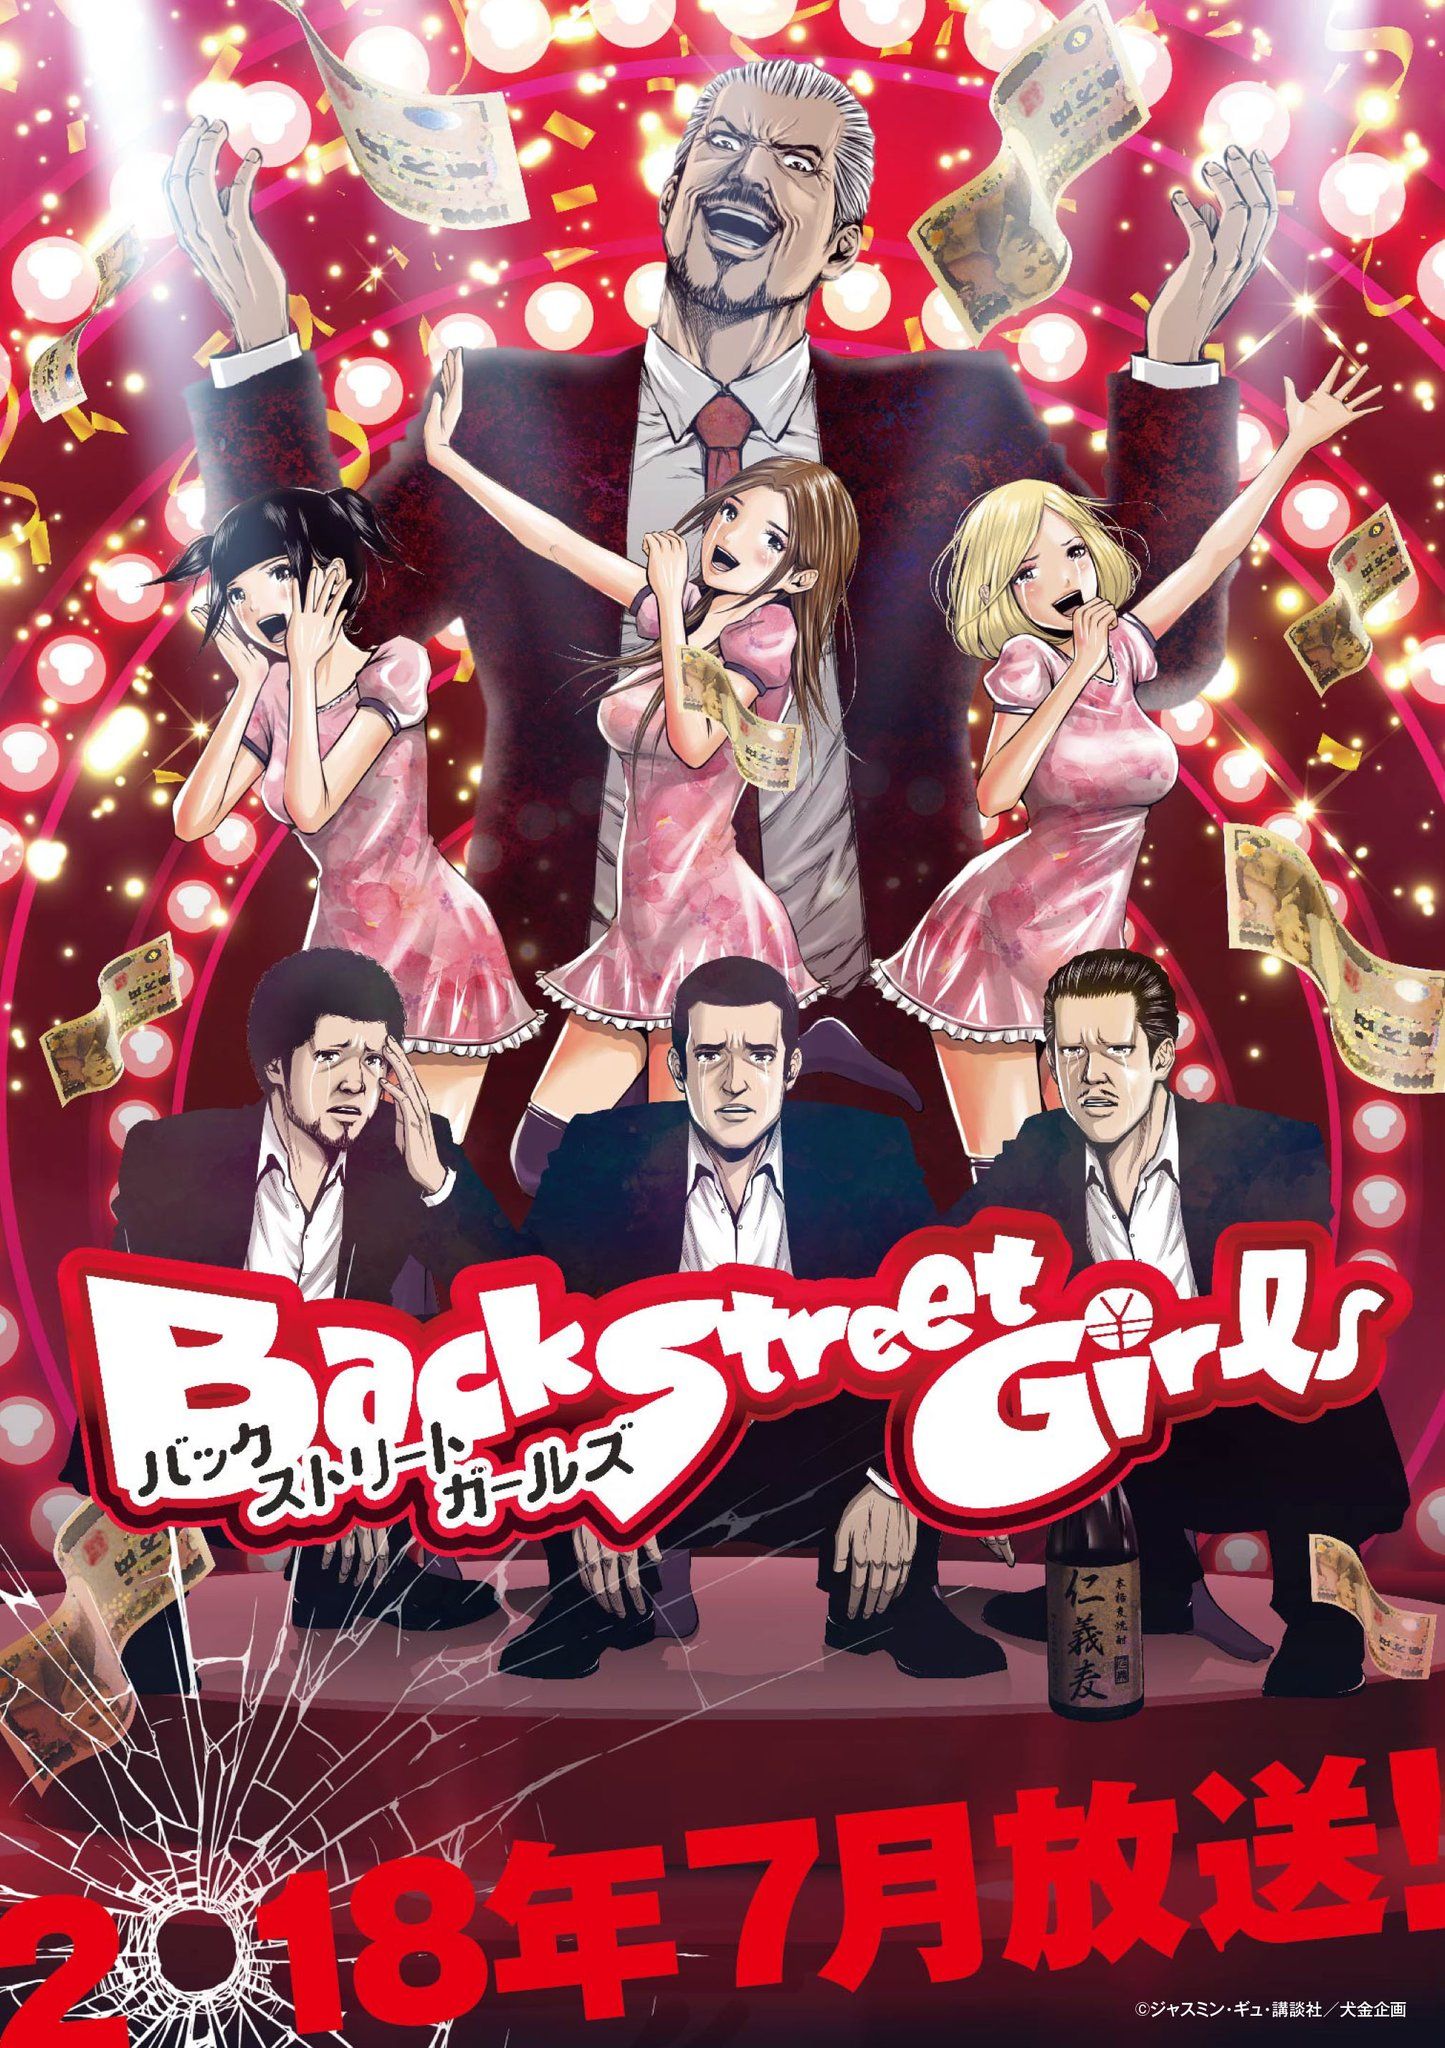 Back Street Girls Anime Image Board